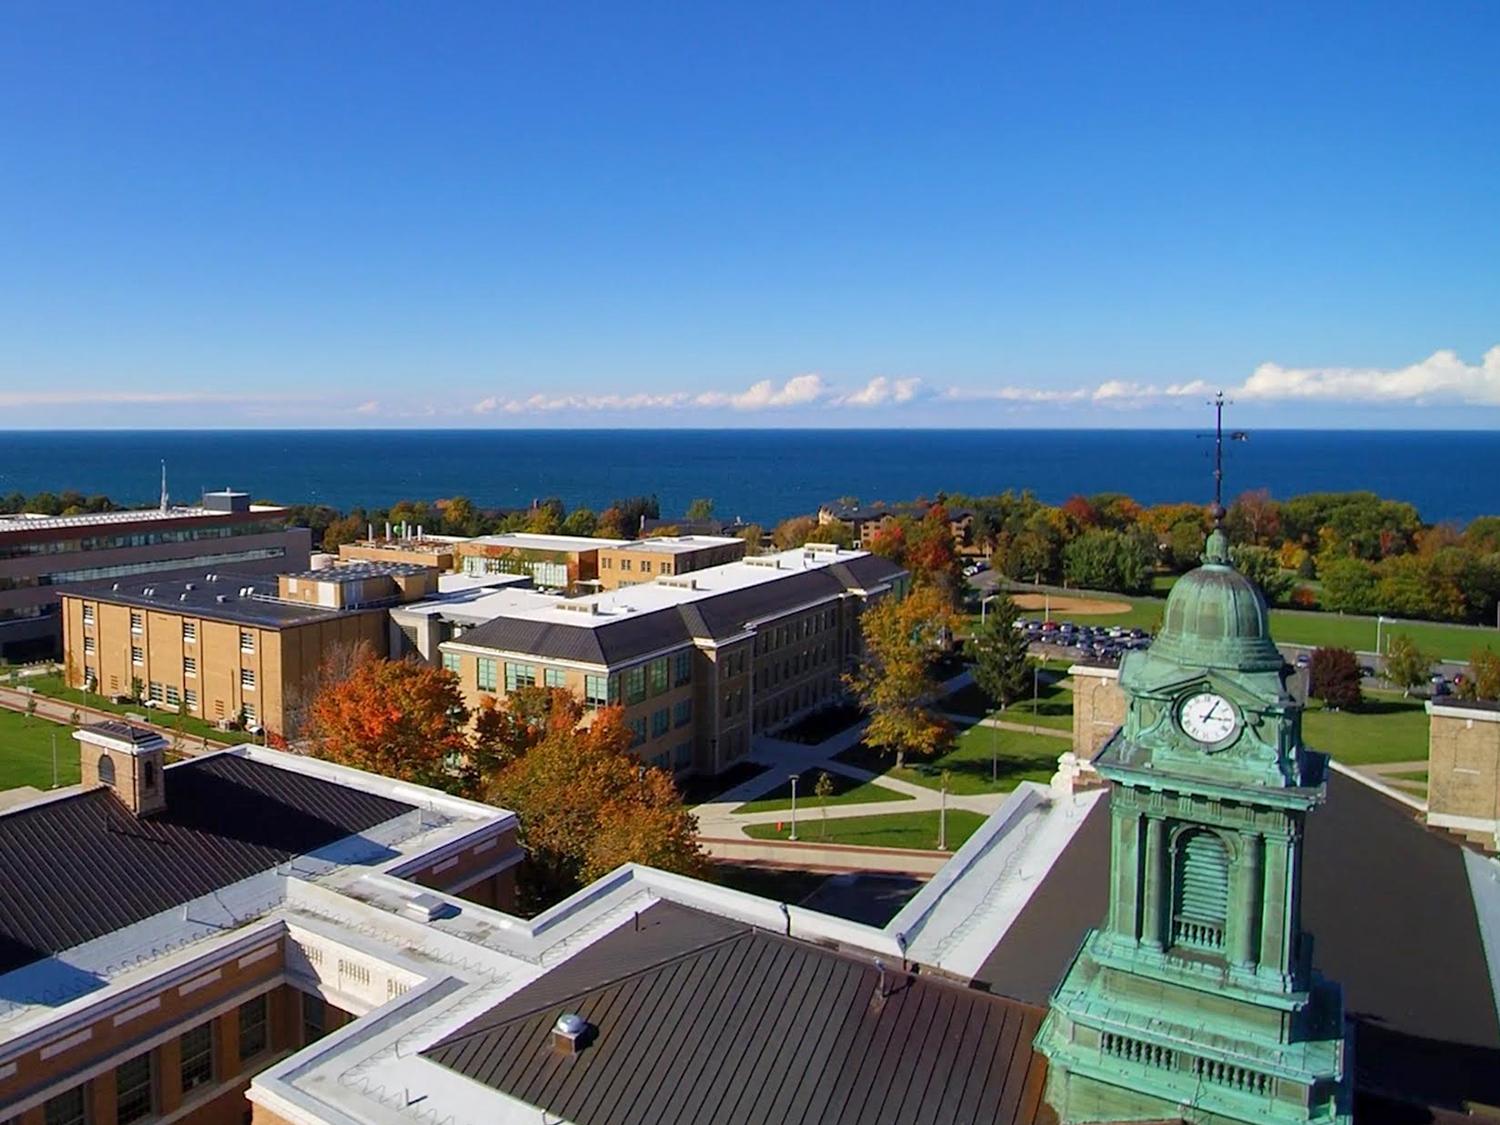 Aerial view of Sheldon. Park-Wilber and Shineman showcasing beautiful campus